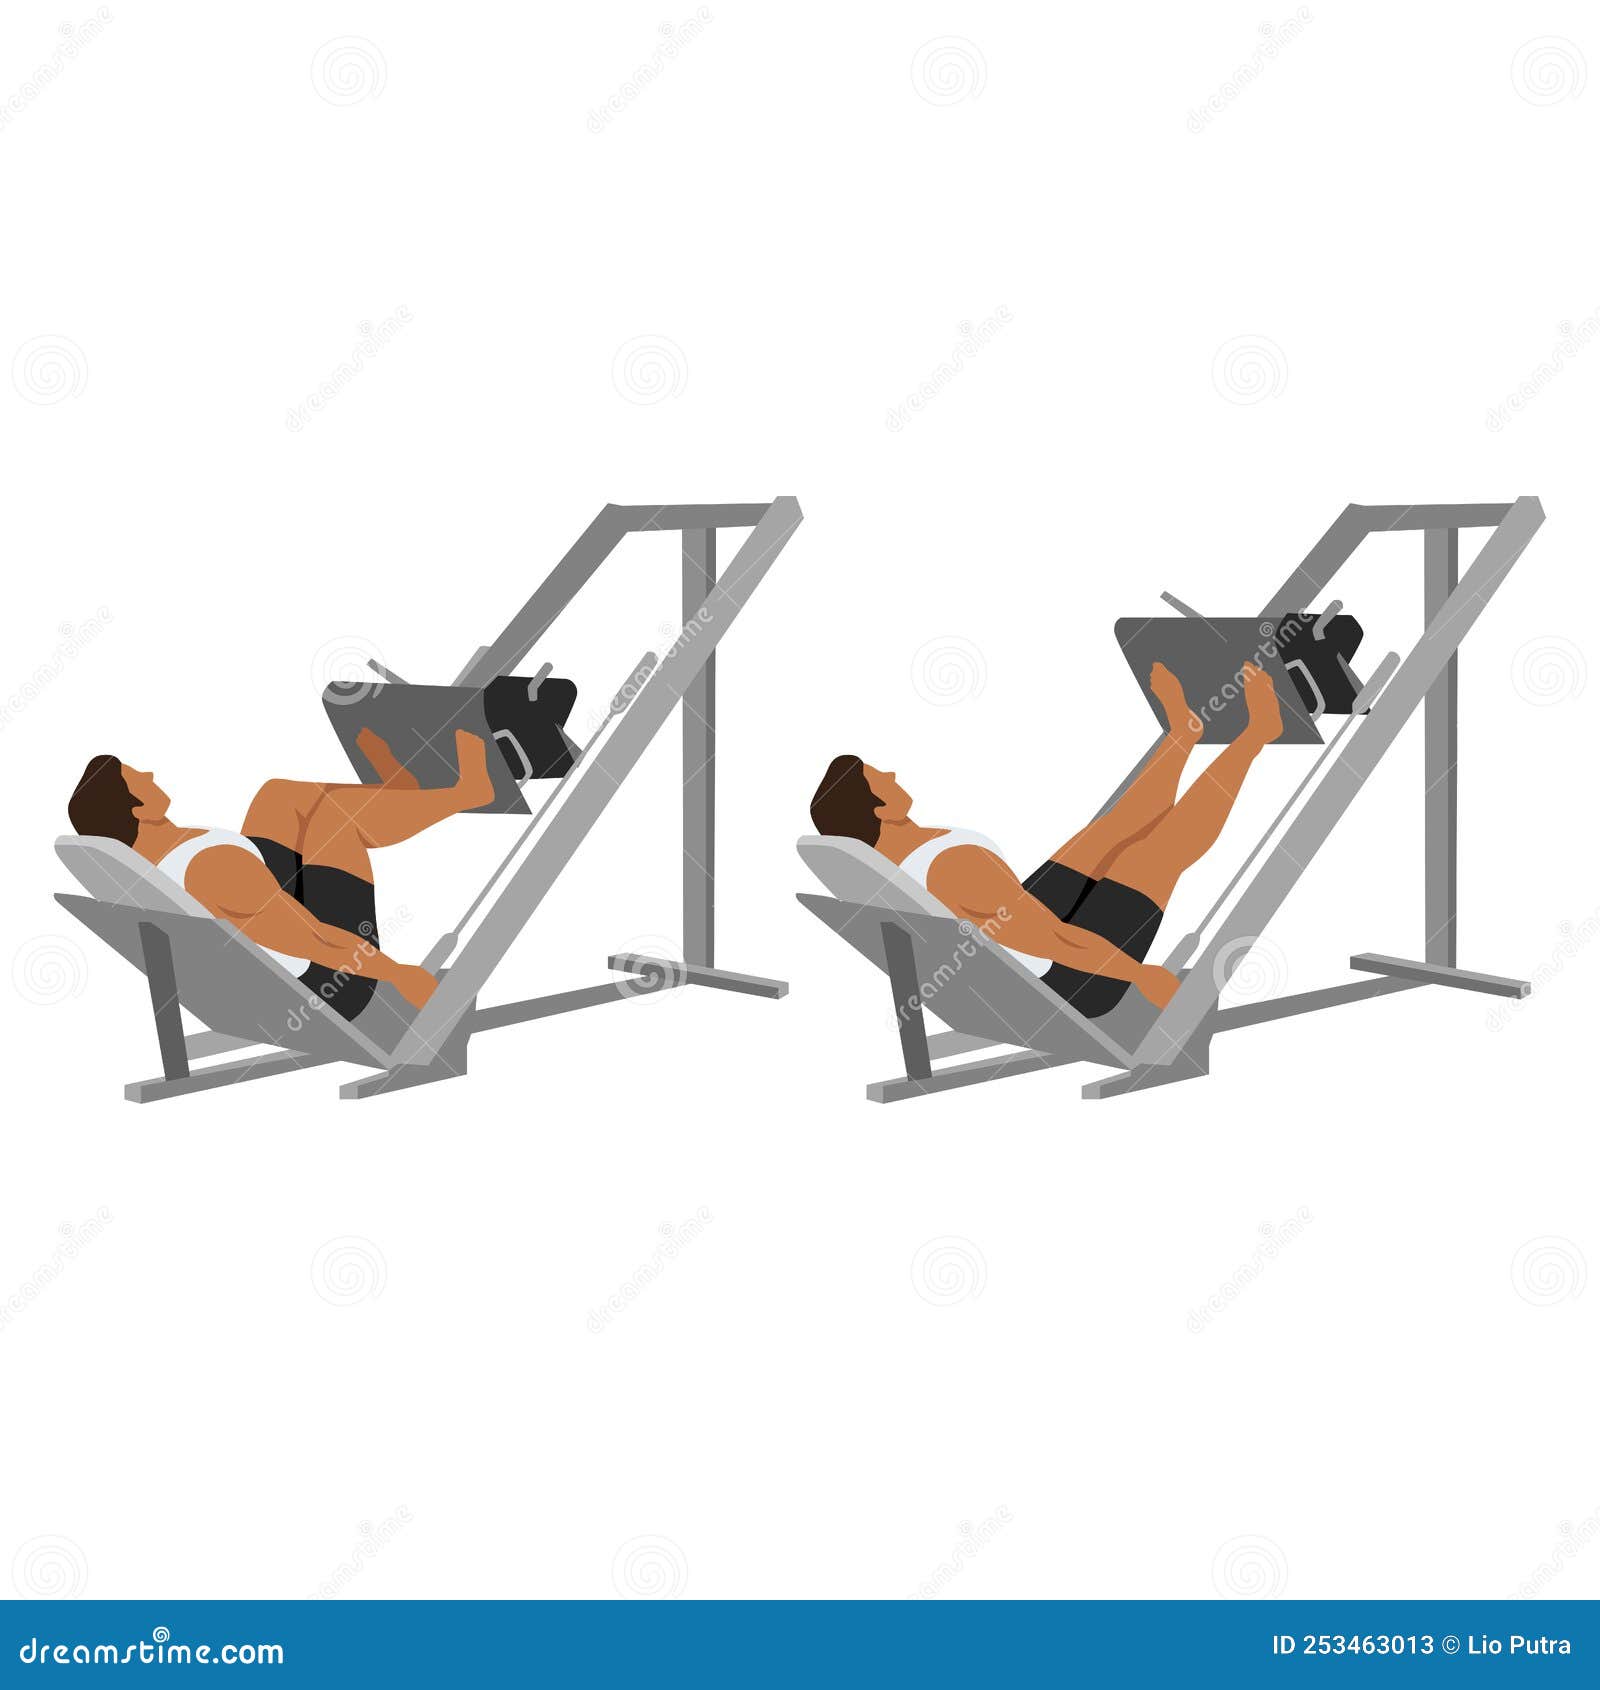 https://thumbs.dreamstime.com/z/man-doing-leg-press-exercise-machine-flat-vector-illustration-isolated-man-doing-leg-press-exercise-machine-flat-vector-253463013.jpg